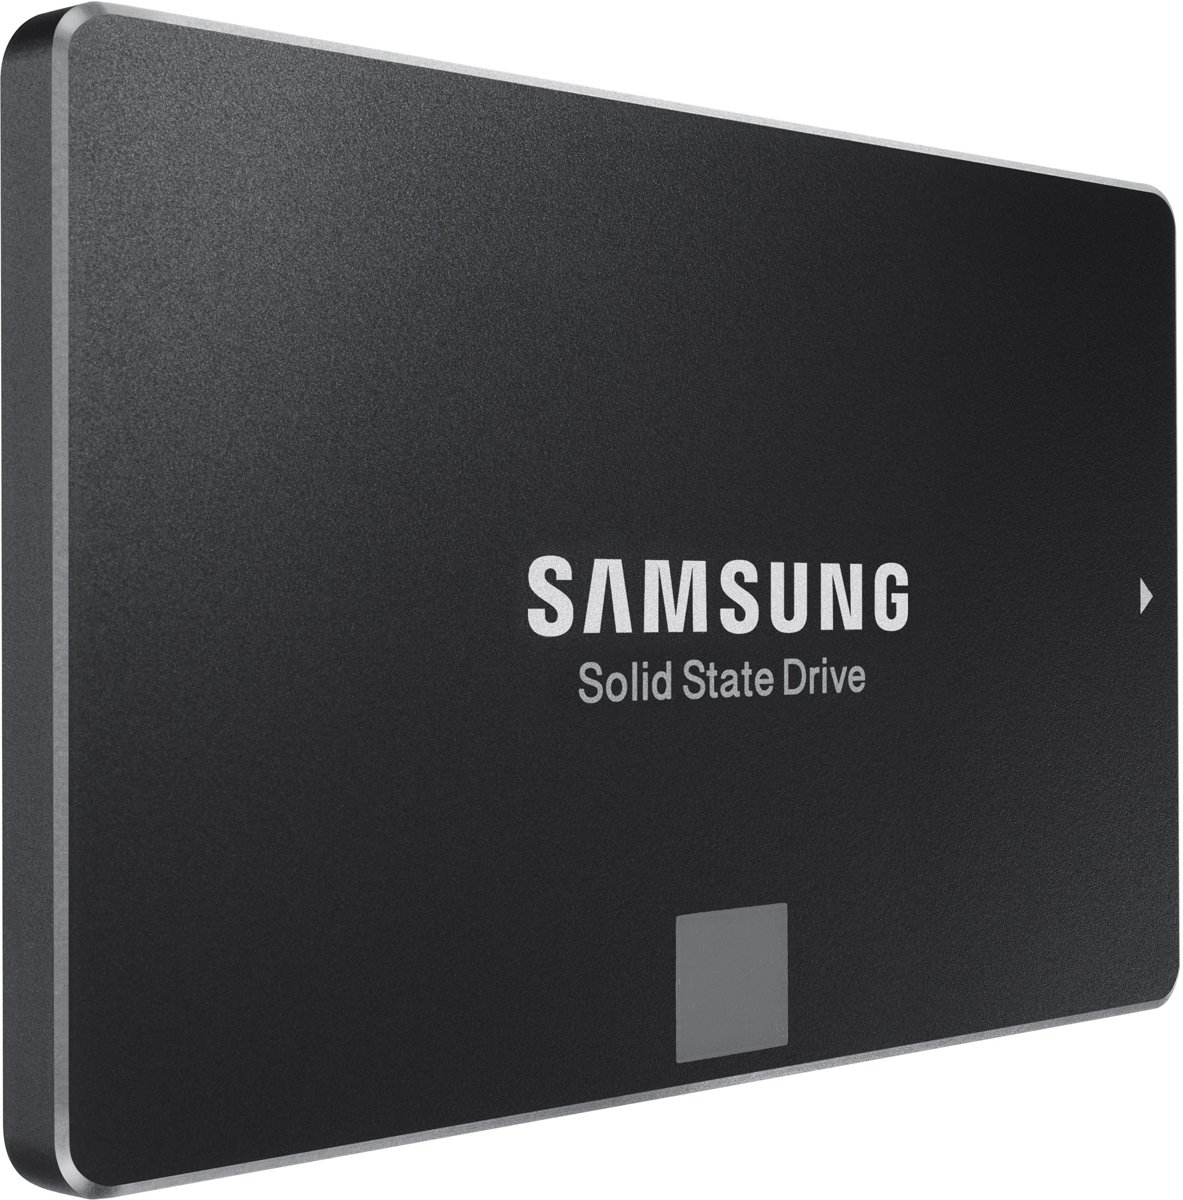 Samsung 850 EVO - Interne SSD - 250 GB